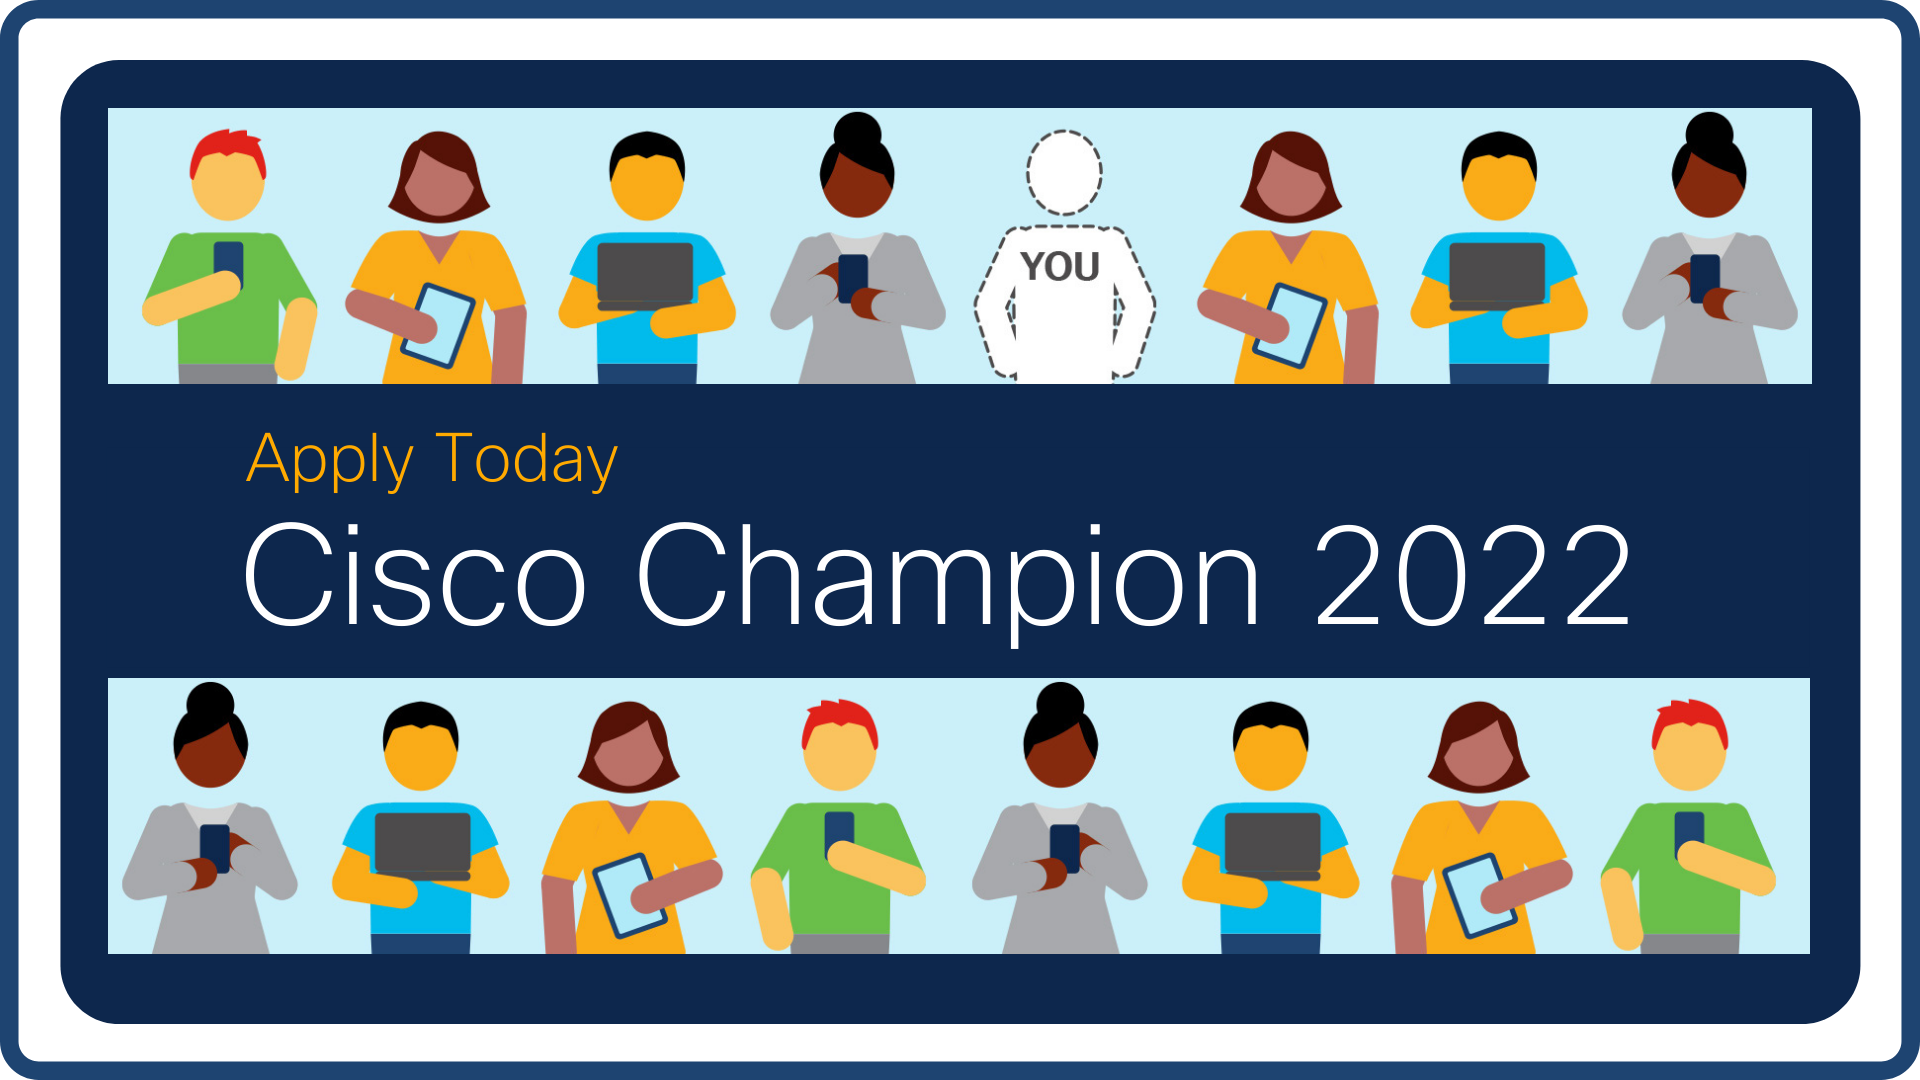 Cisco Champion applications now open -